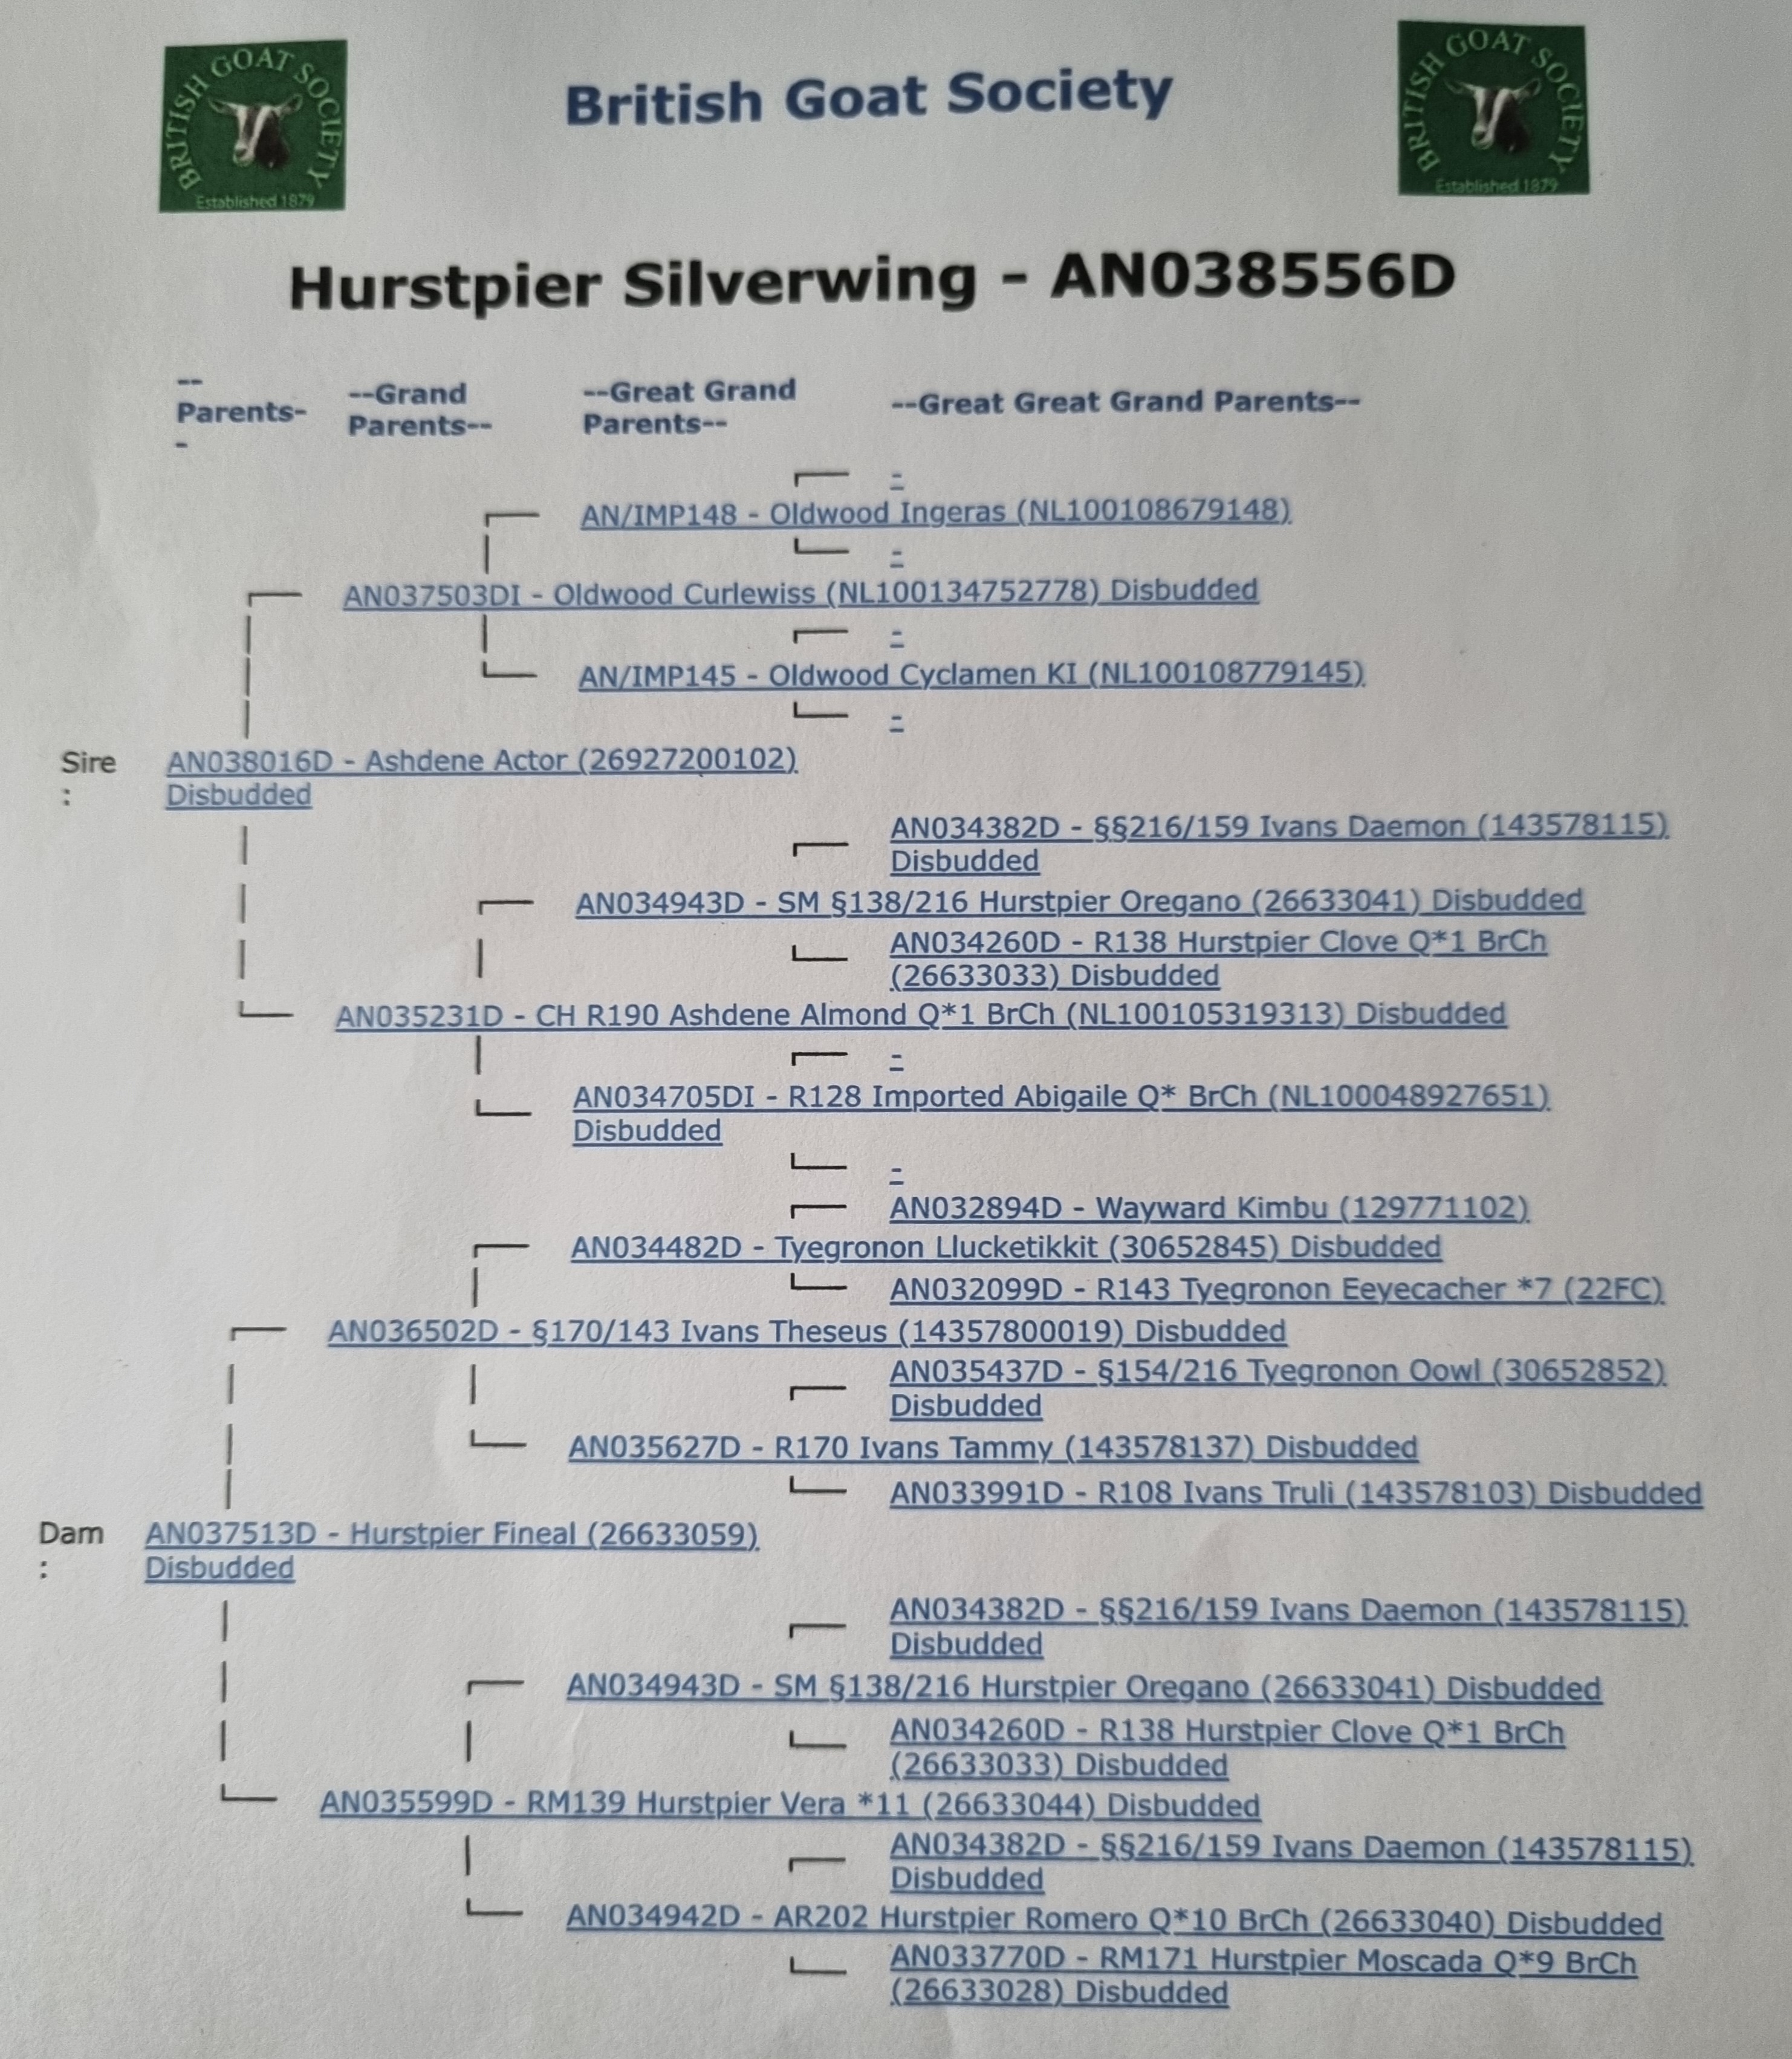 Photo 2 - Hurspier Silverwing image